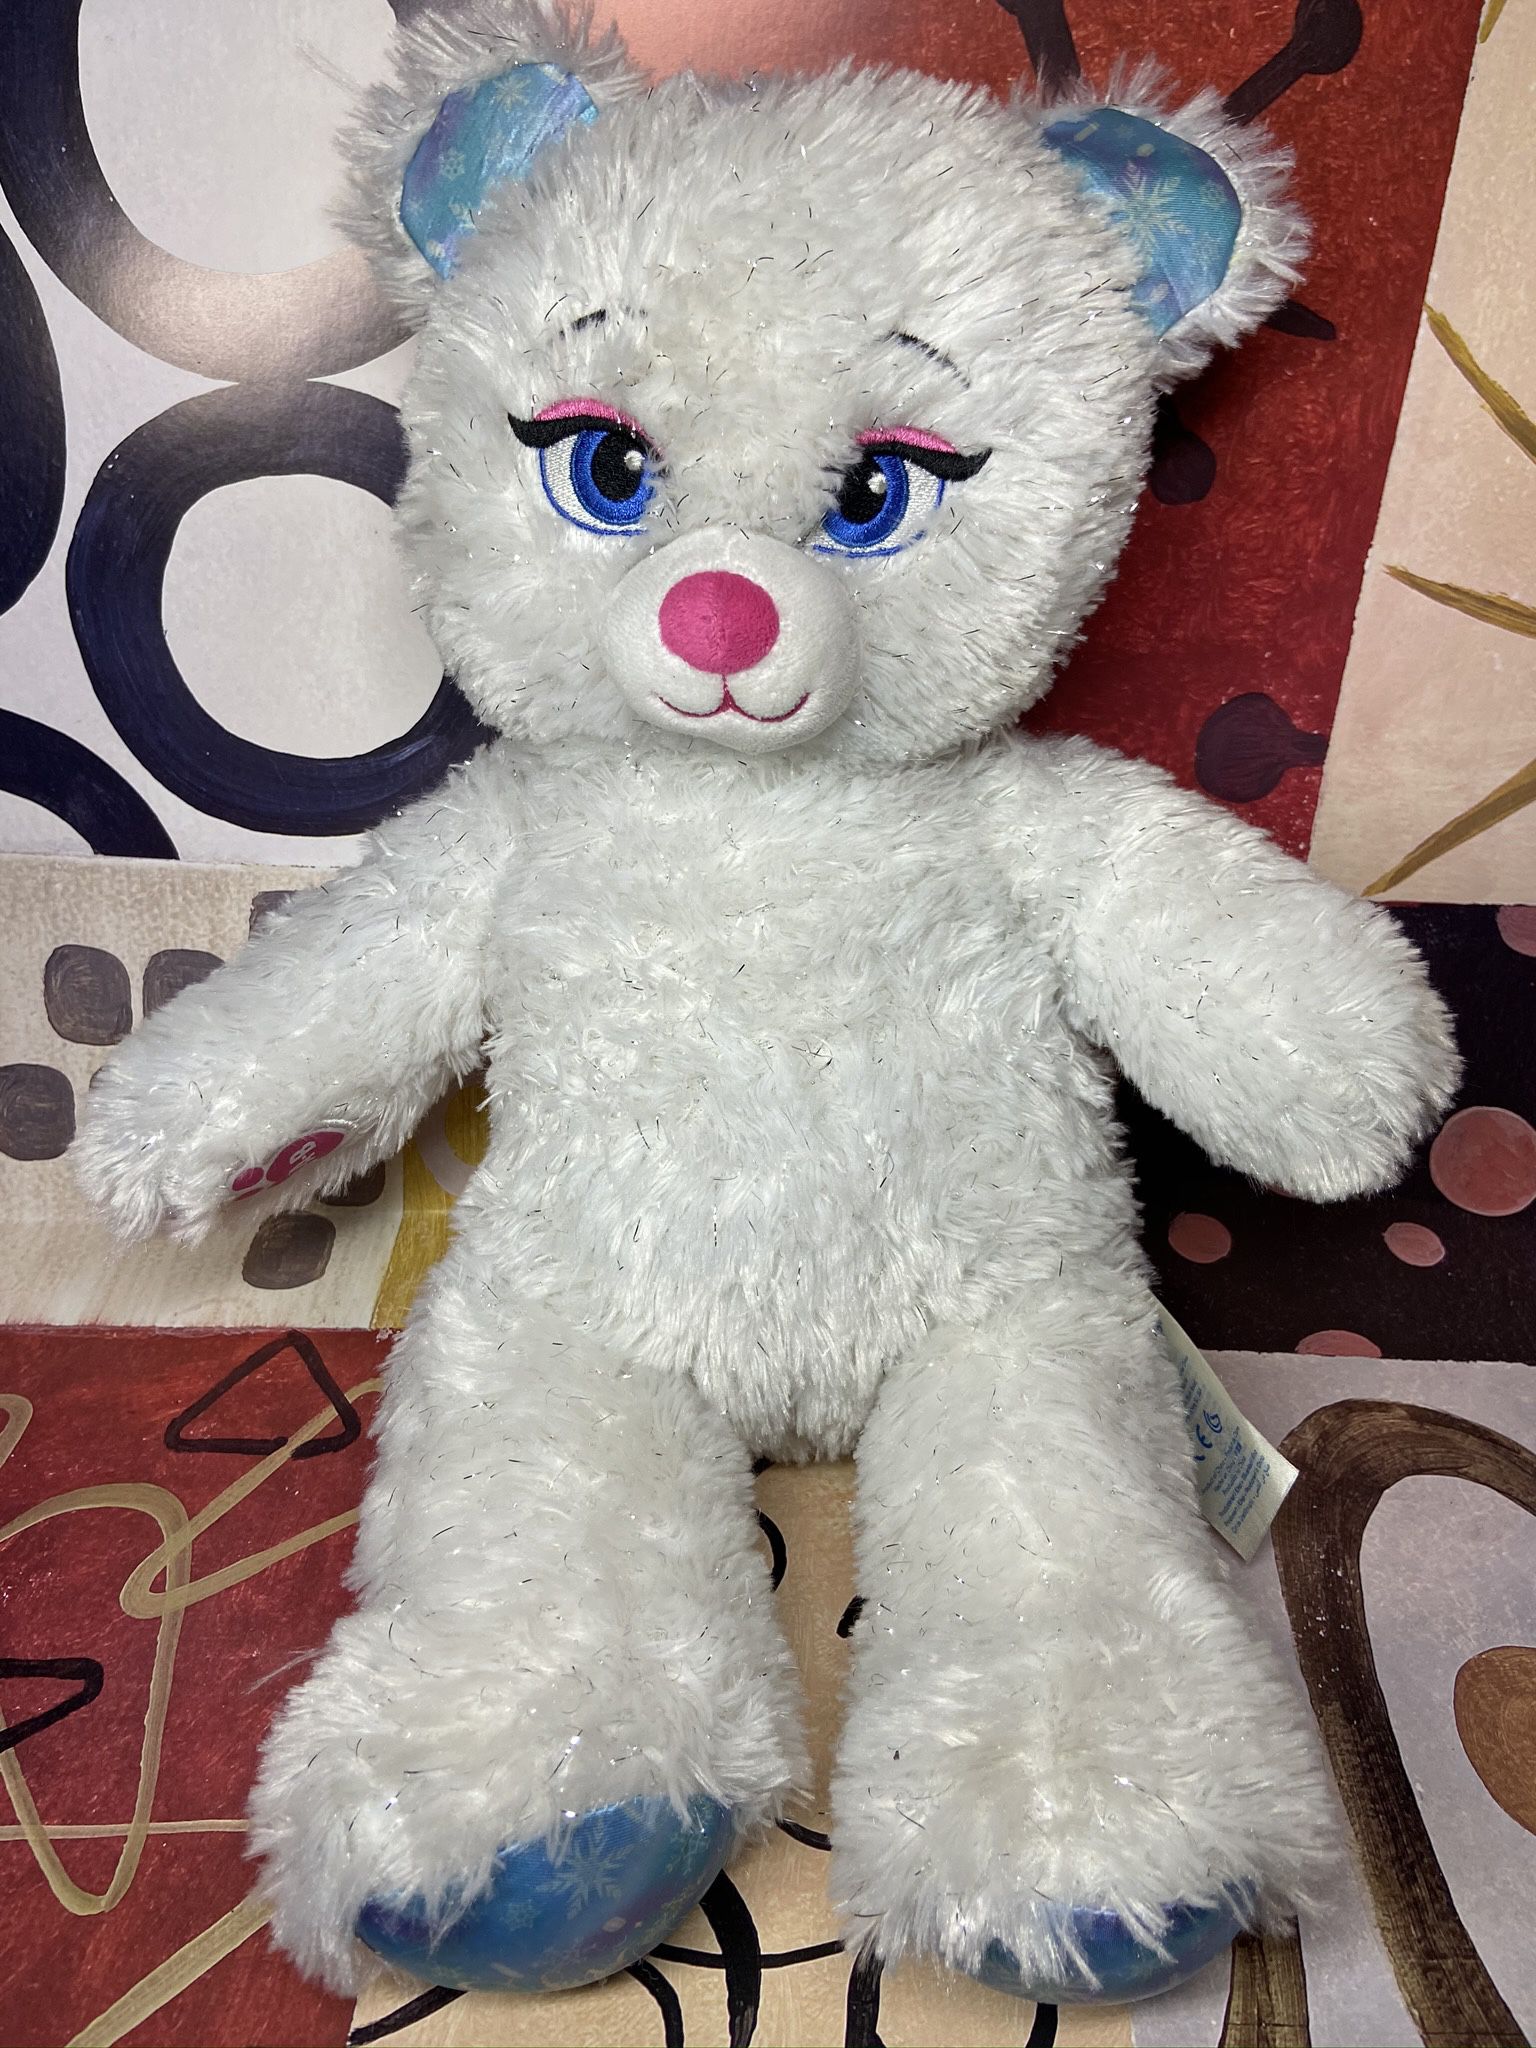 Disney Frozen Elsa Inspired build a Bear doll 17”. This teddy bear has white fur